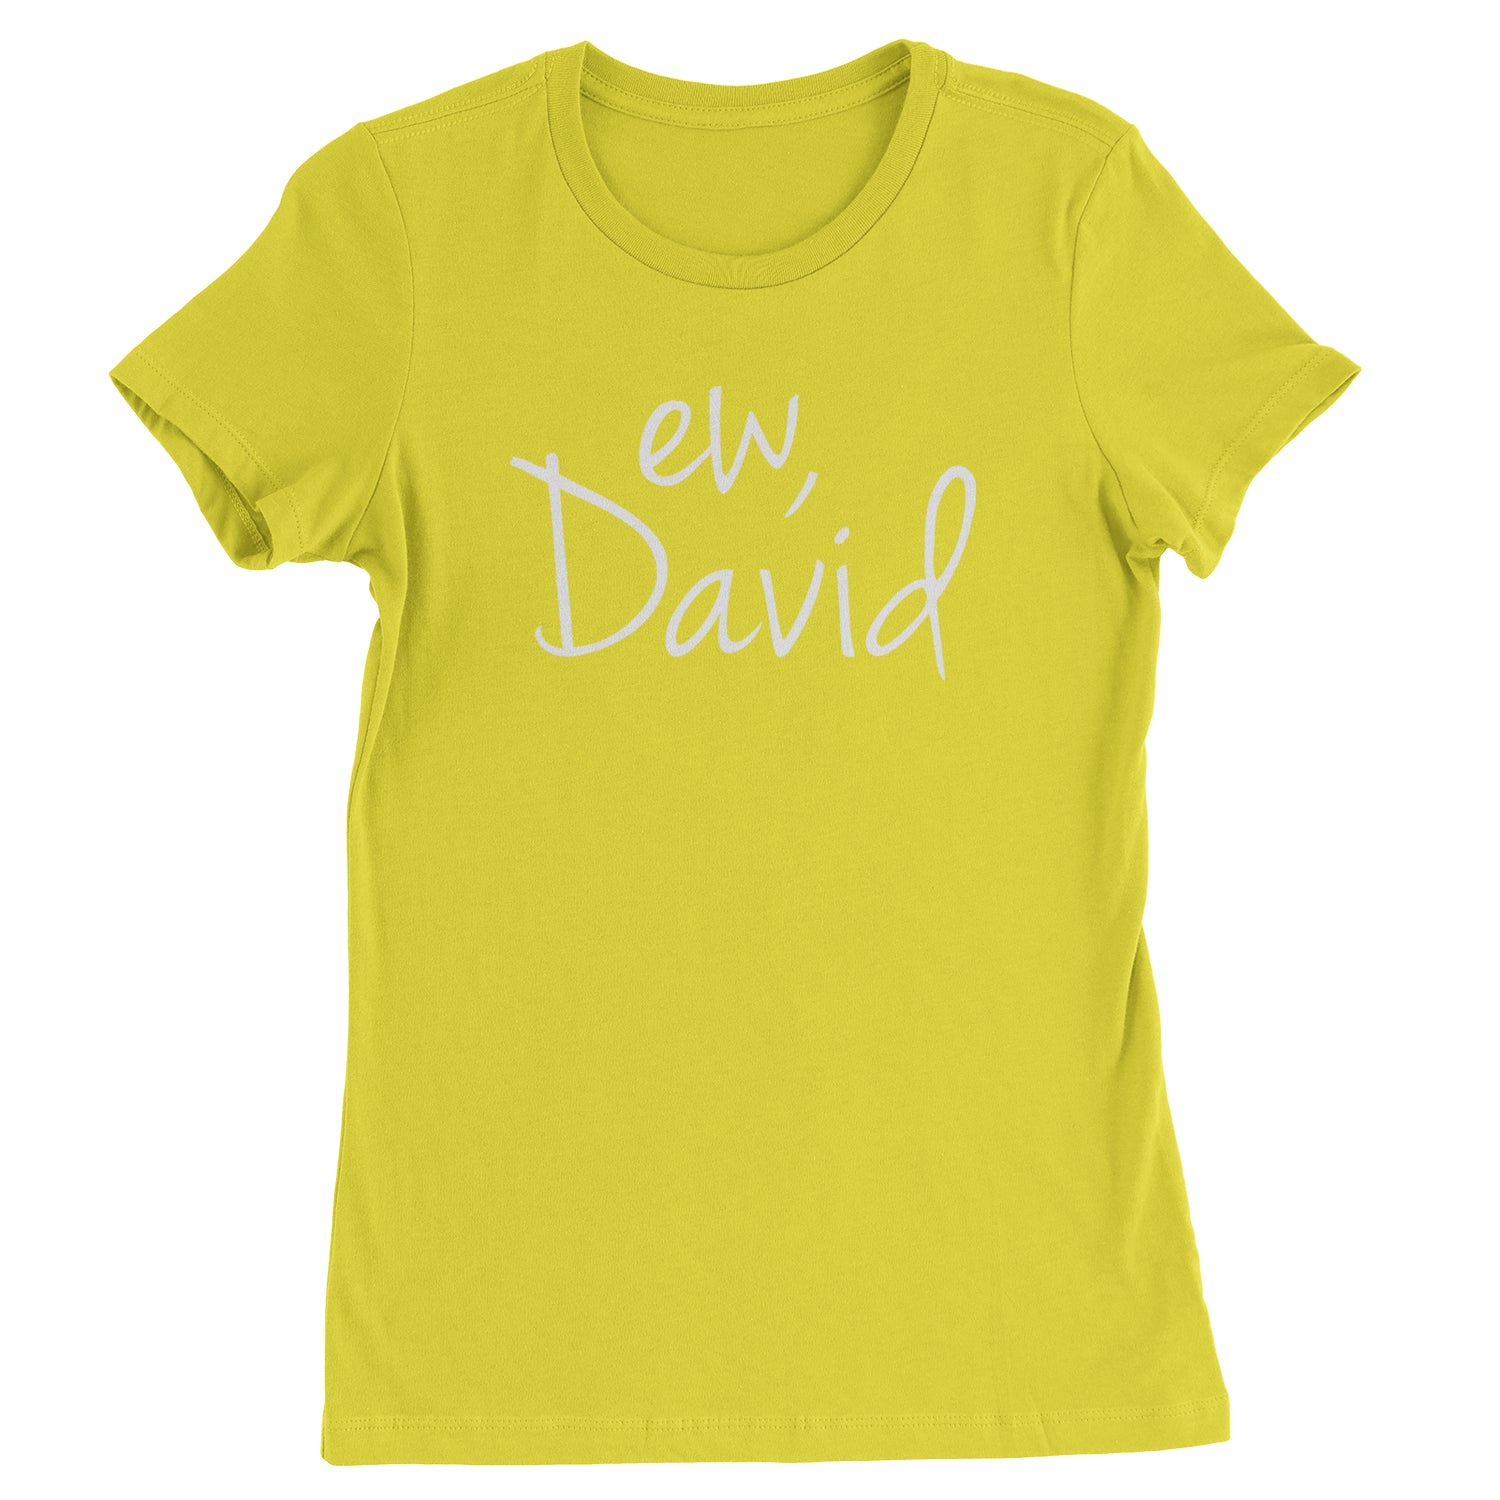 Ew, David Funny Creek TV Show Womens T-shirt alexis, bit, david, eugene, levy, little, nonchalance, schitt by Expression Tees